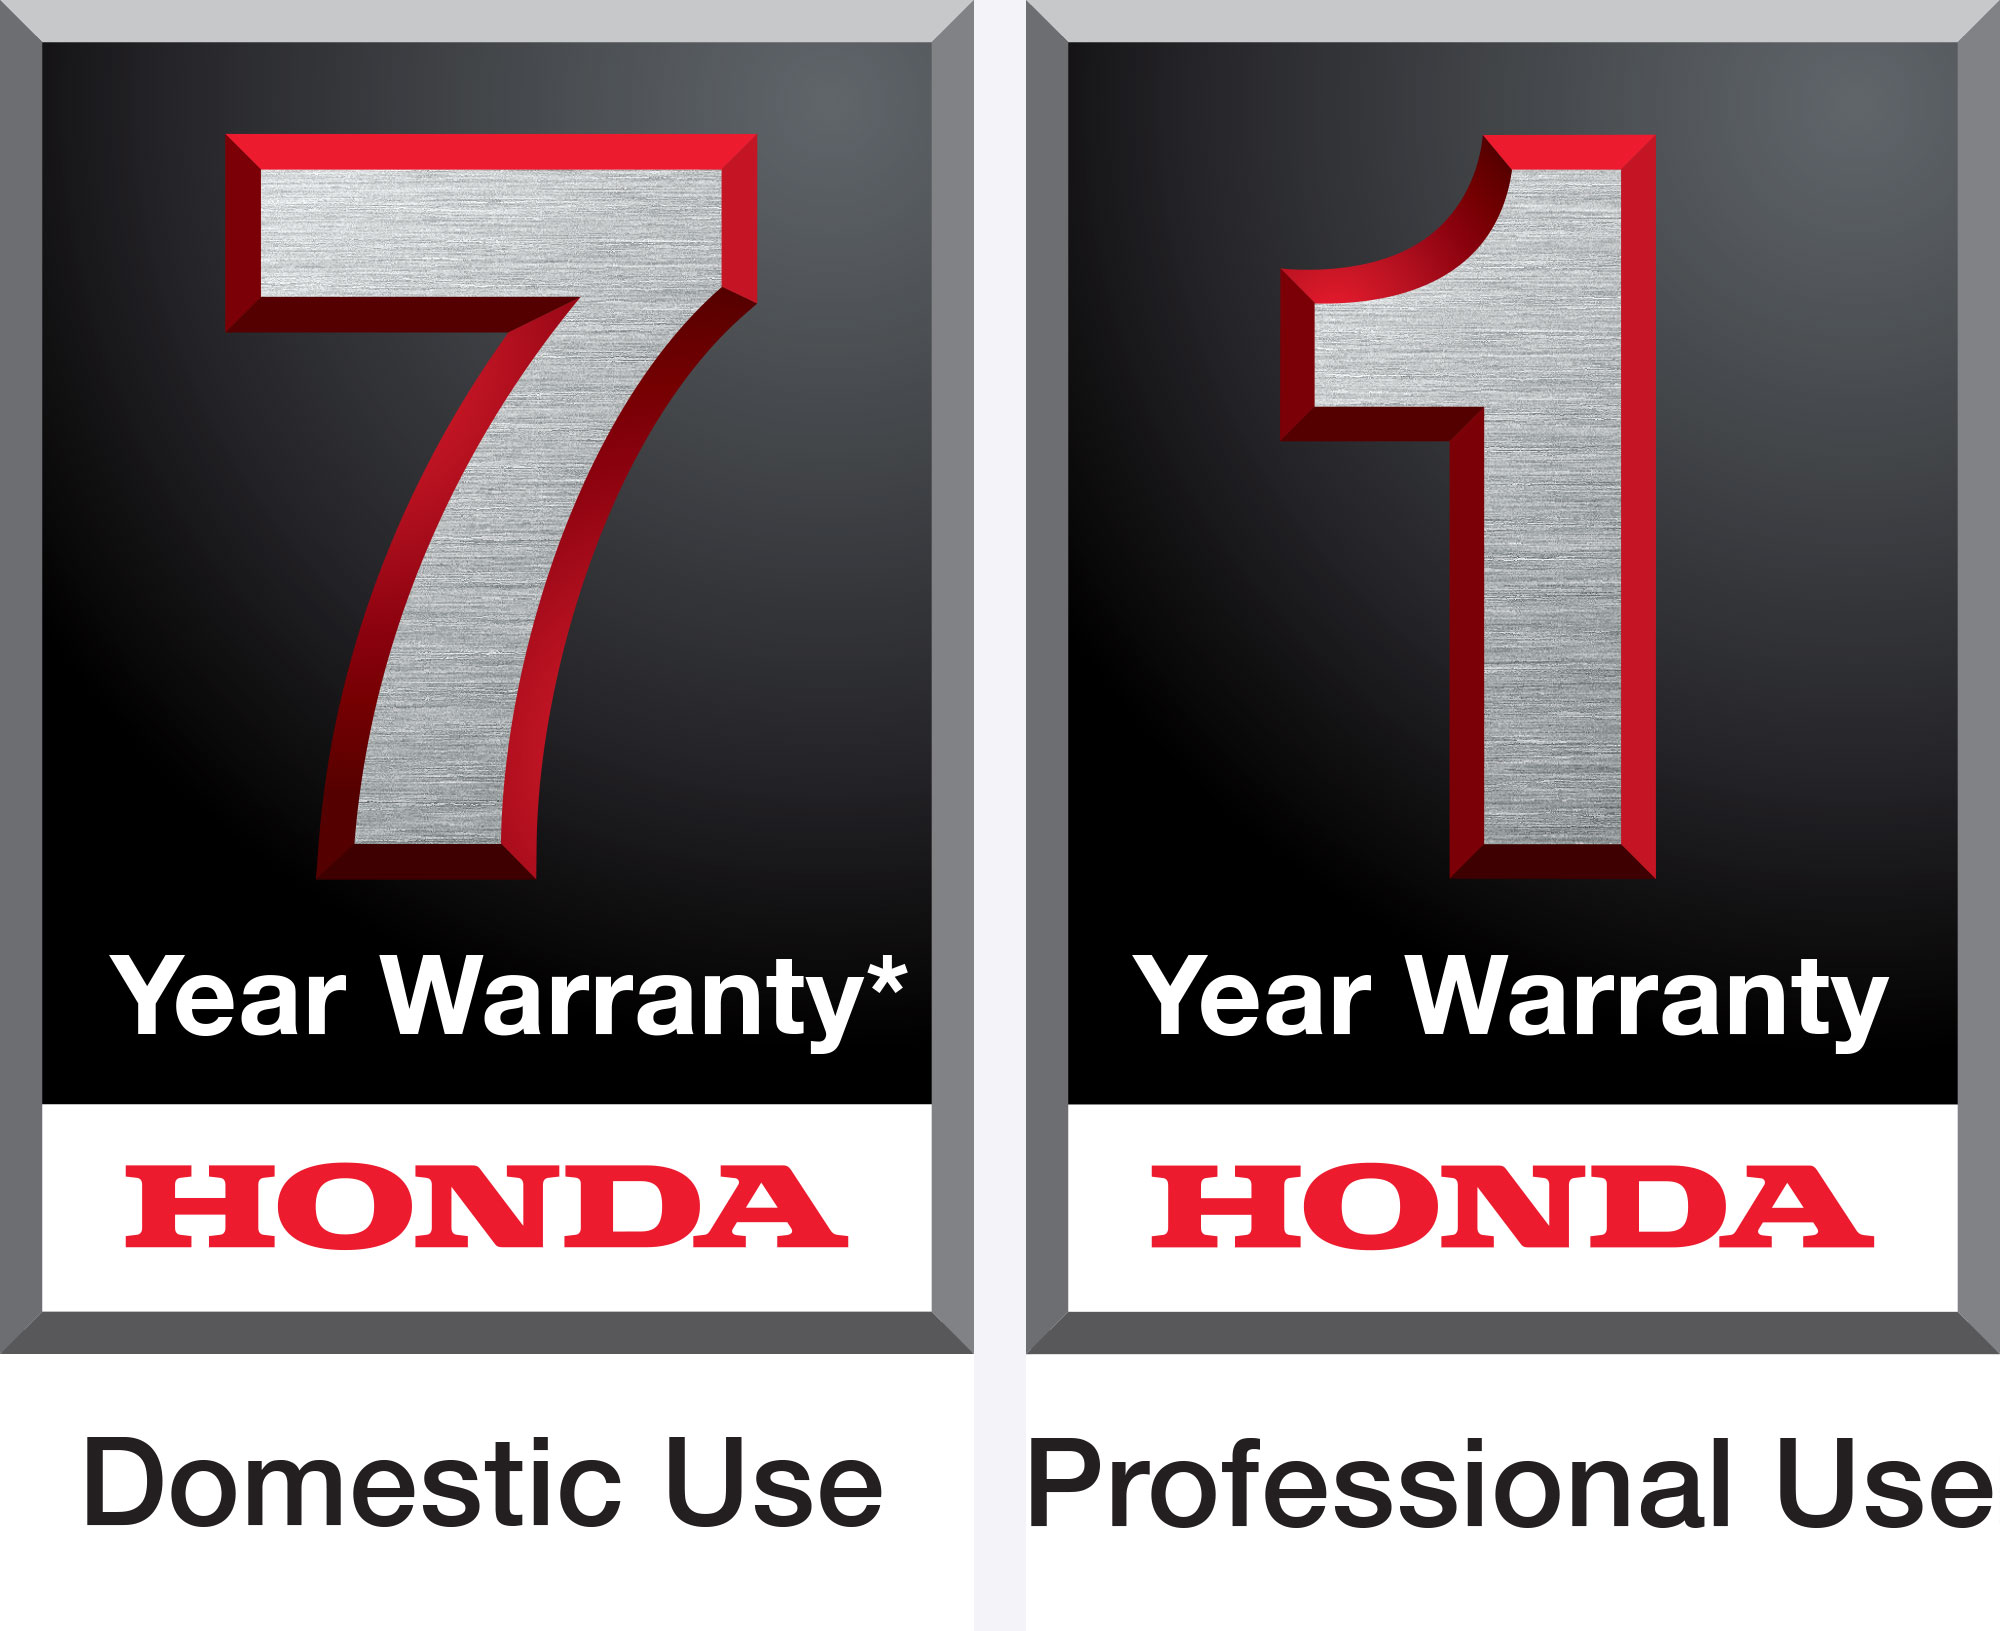 7 year warranty. Honda. Domestic Use. 1 year warranty. Honda. Professional Use.